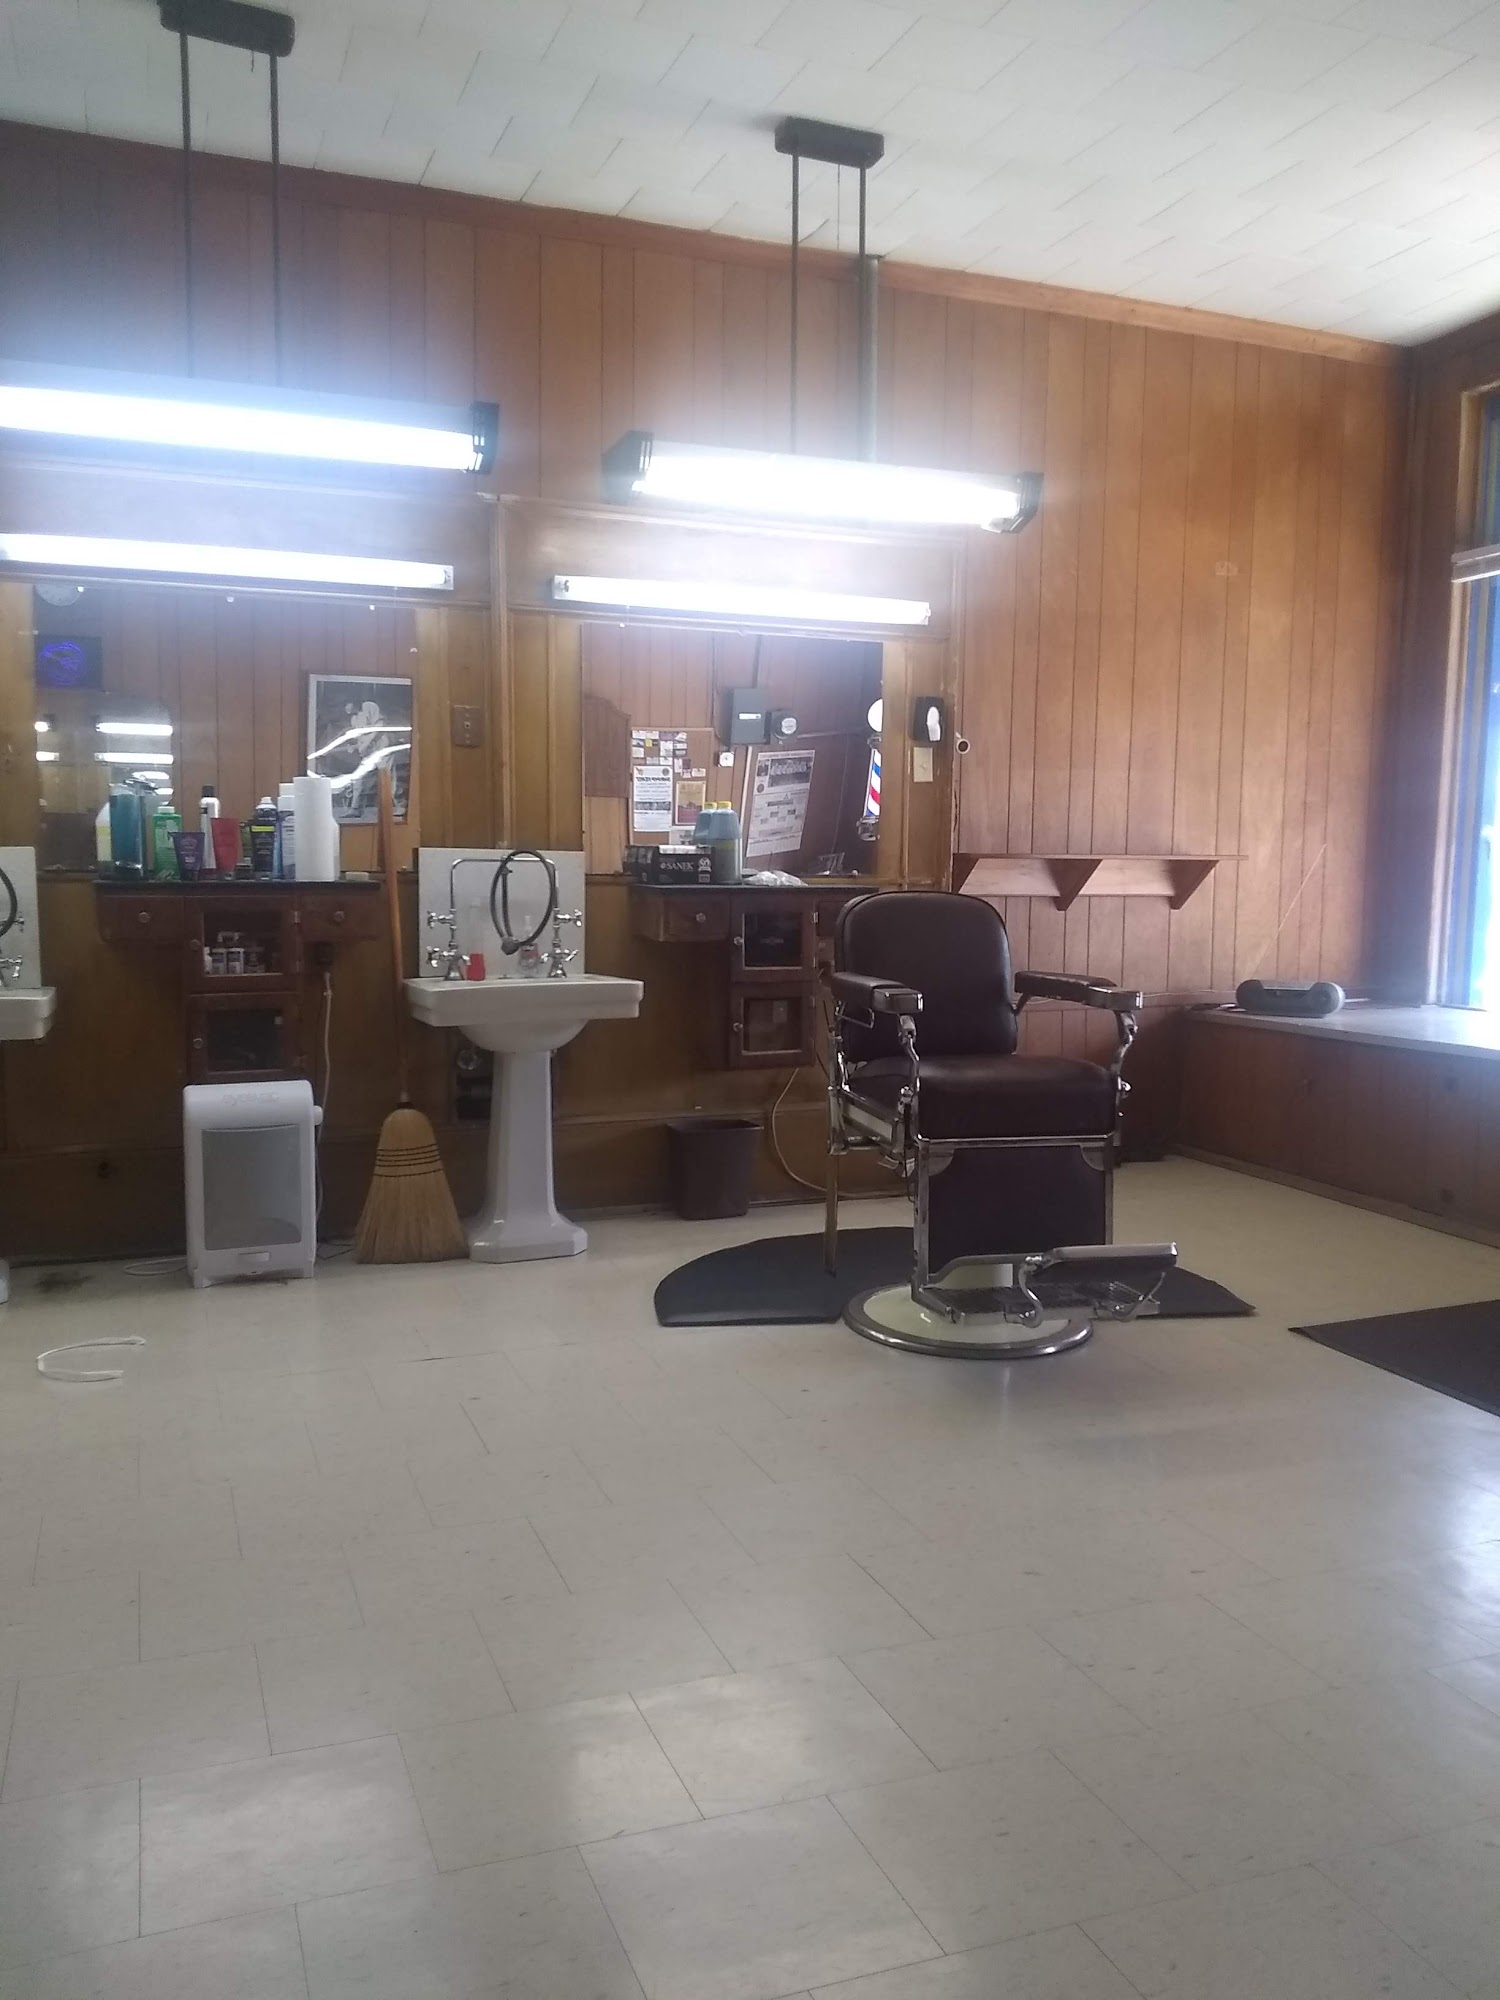 Barnes Barber Shop 114 W Main St, Murfreesboro North Carolina 27855